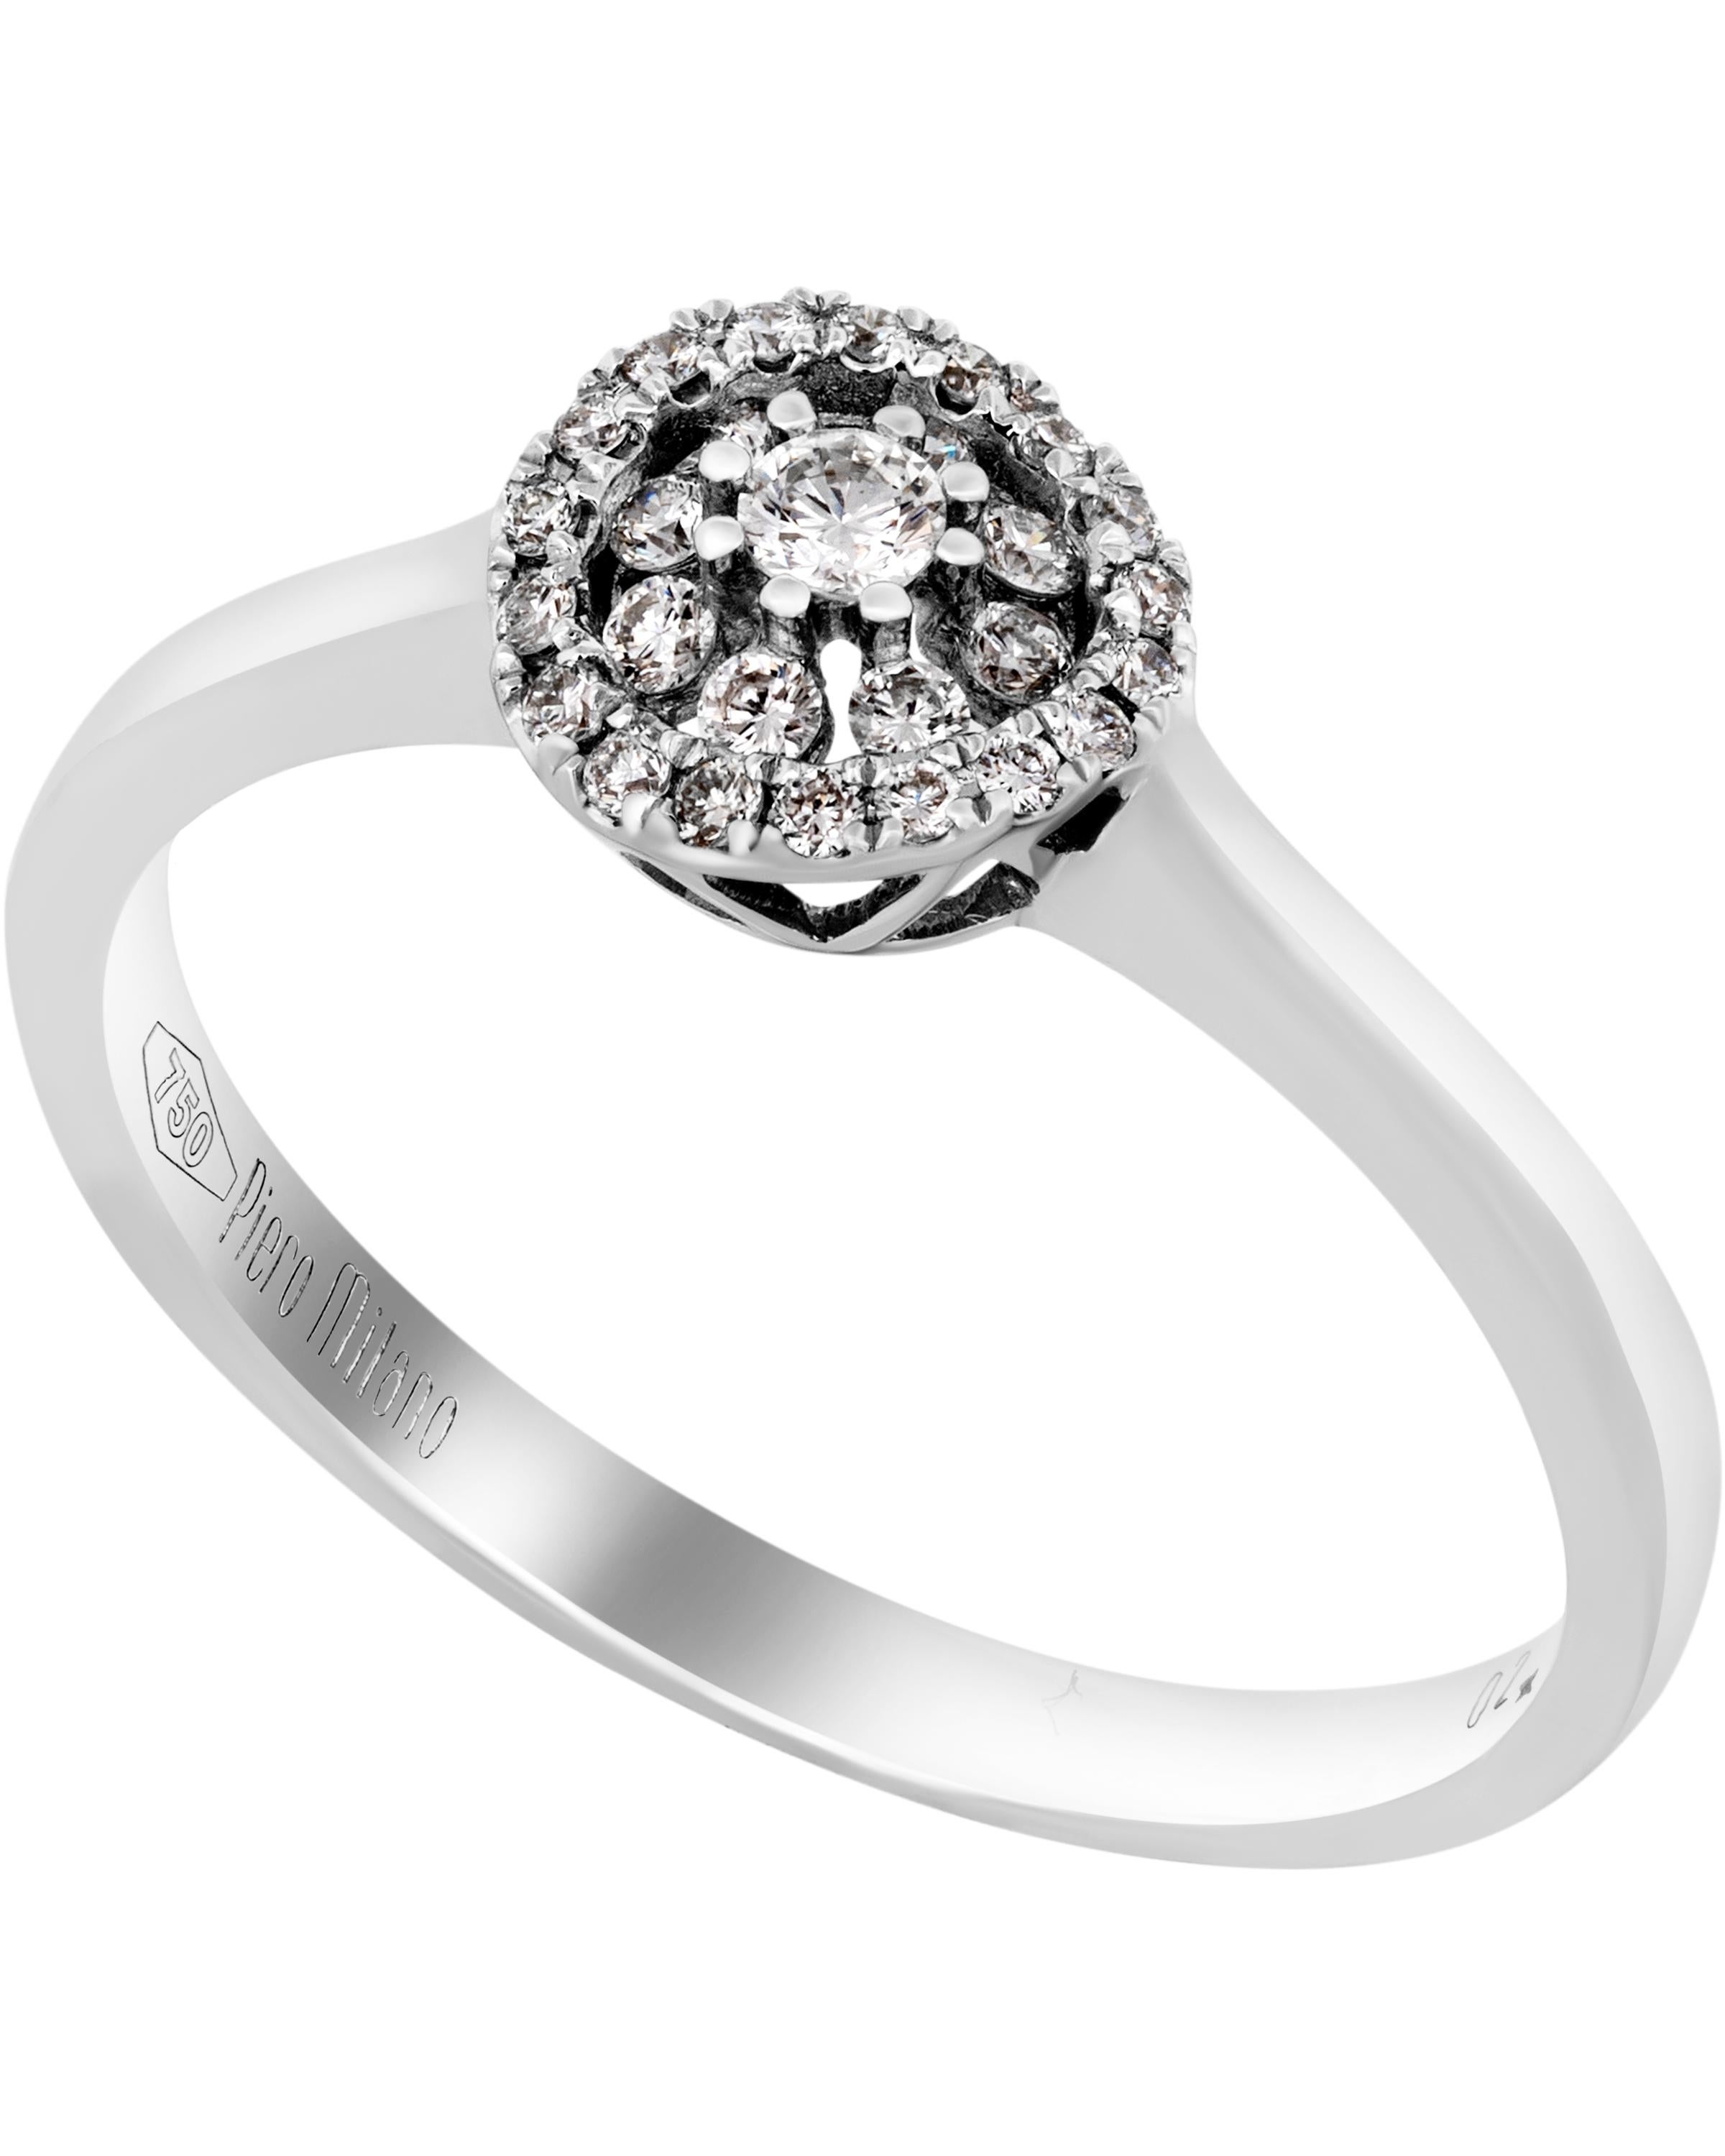 Contemporary Piero Milano 18K White Gold Diamond Ring Sz 7.75 For Sale